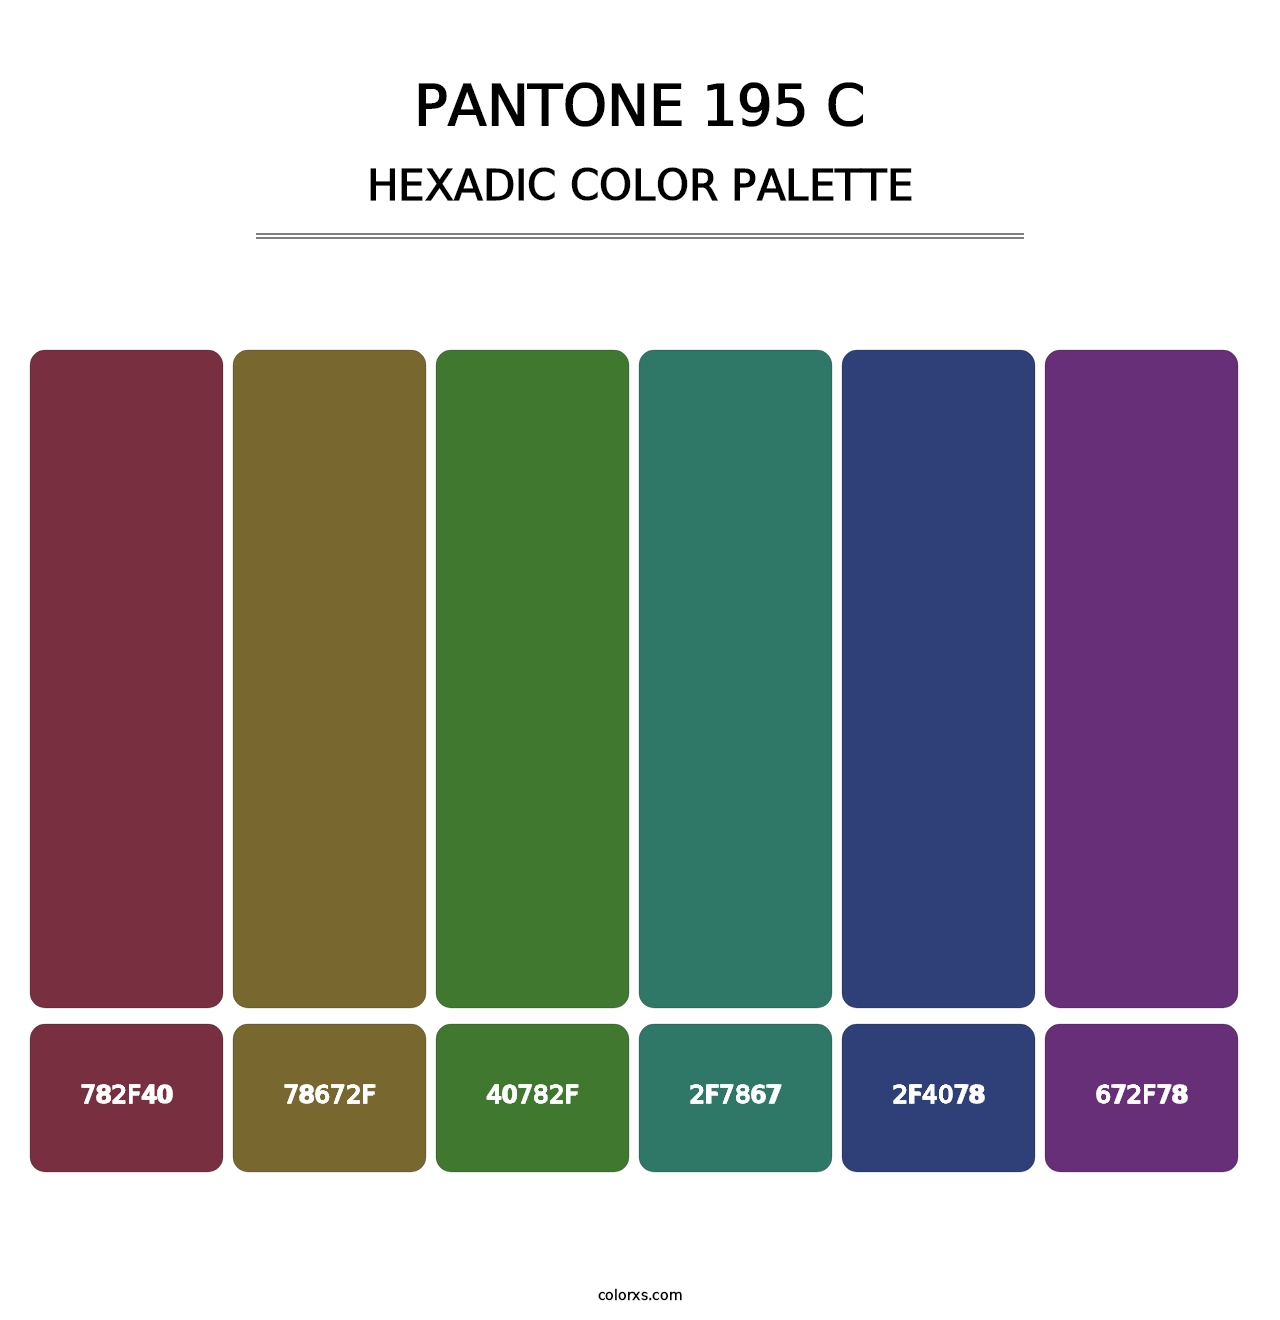 PANTONE 195 C - Hexadic Color Palette